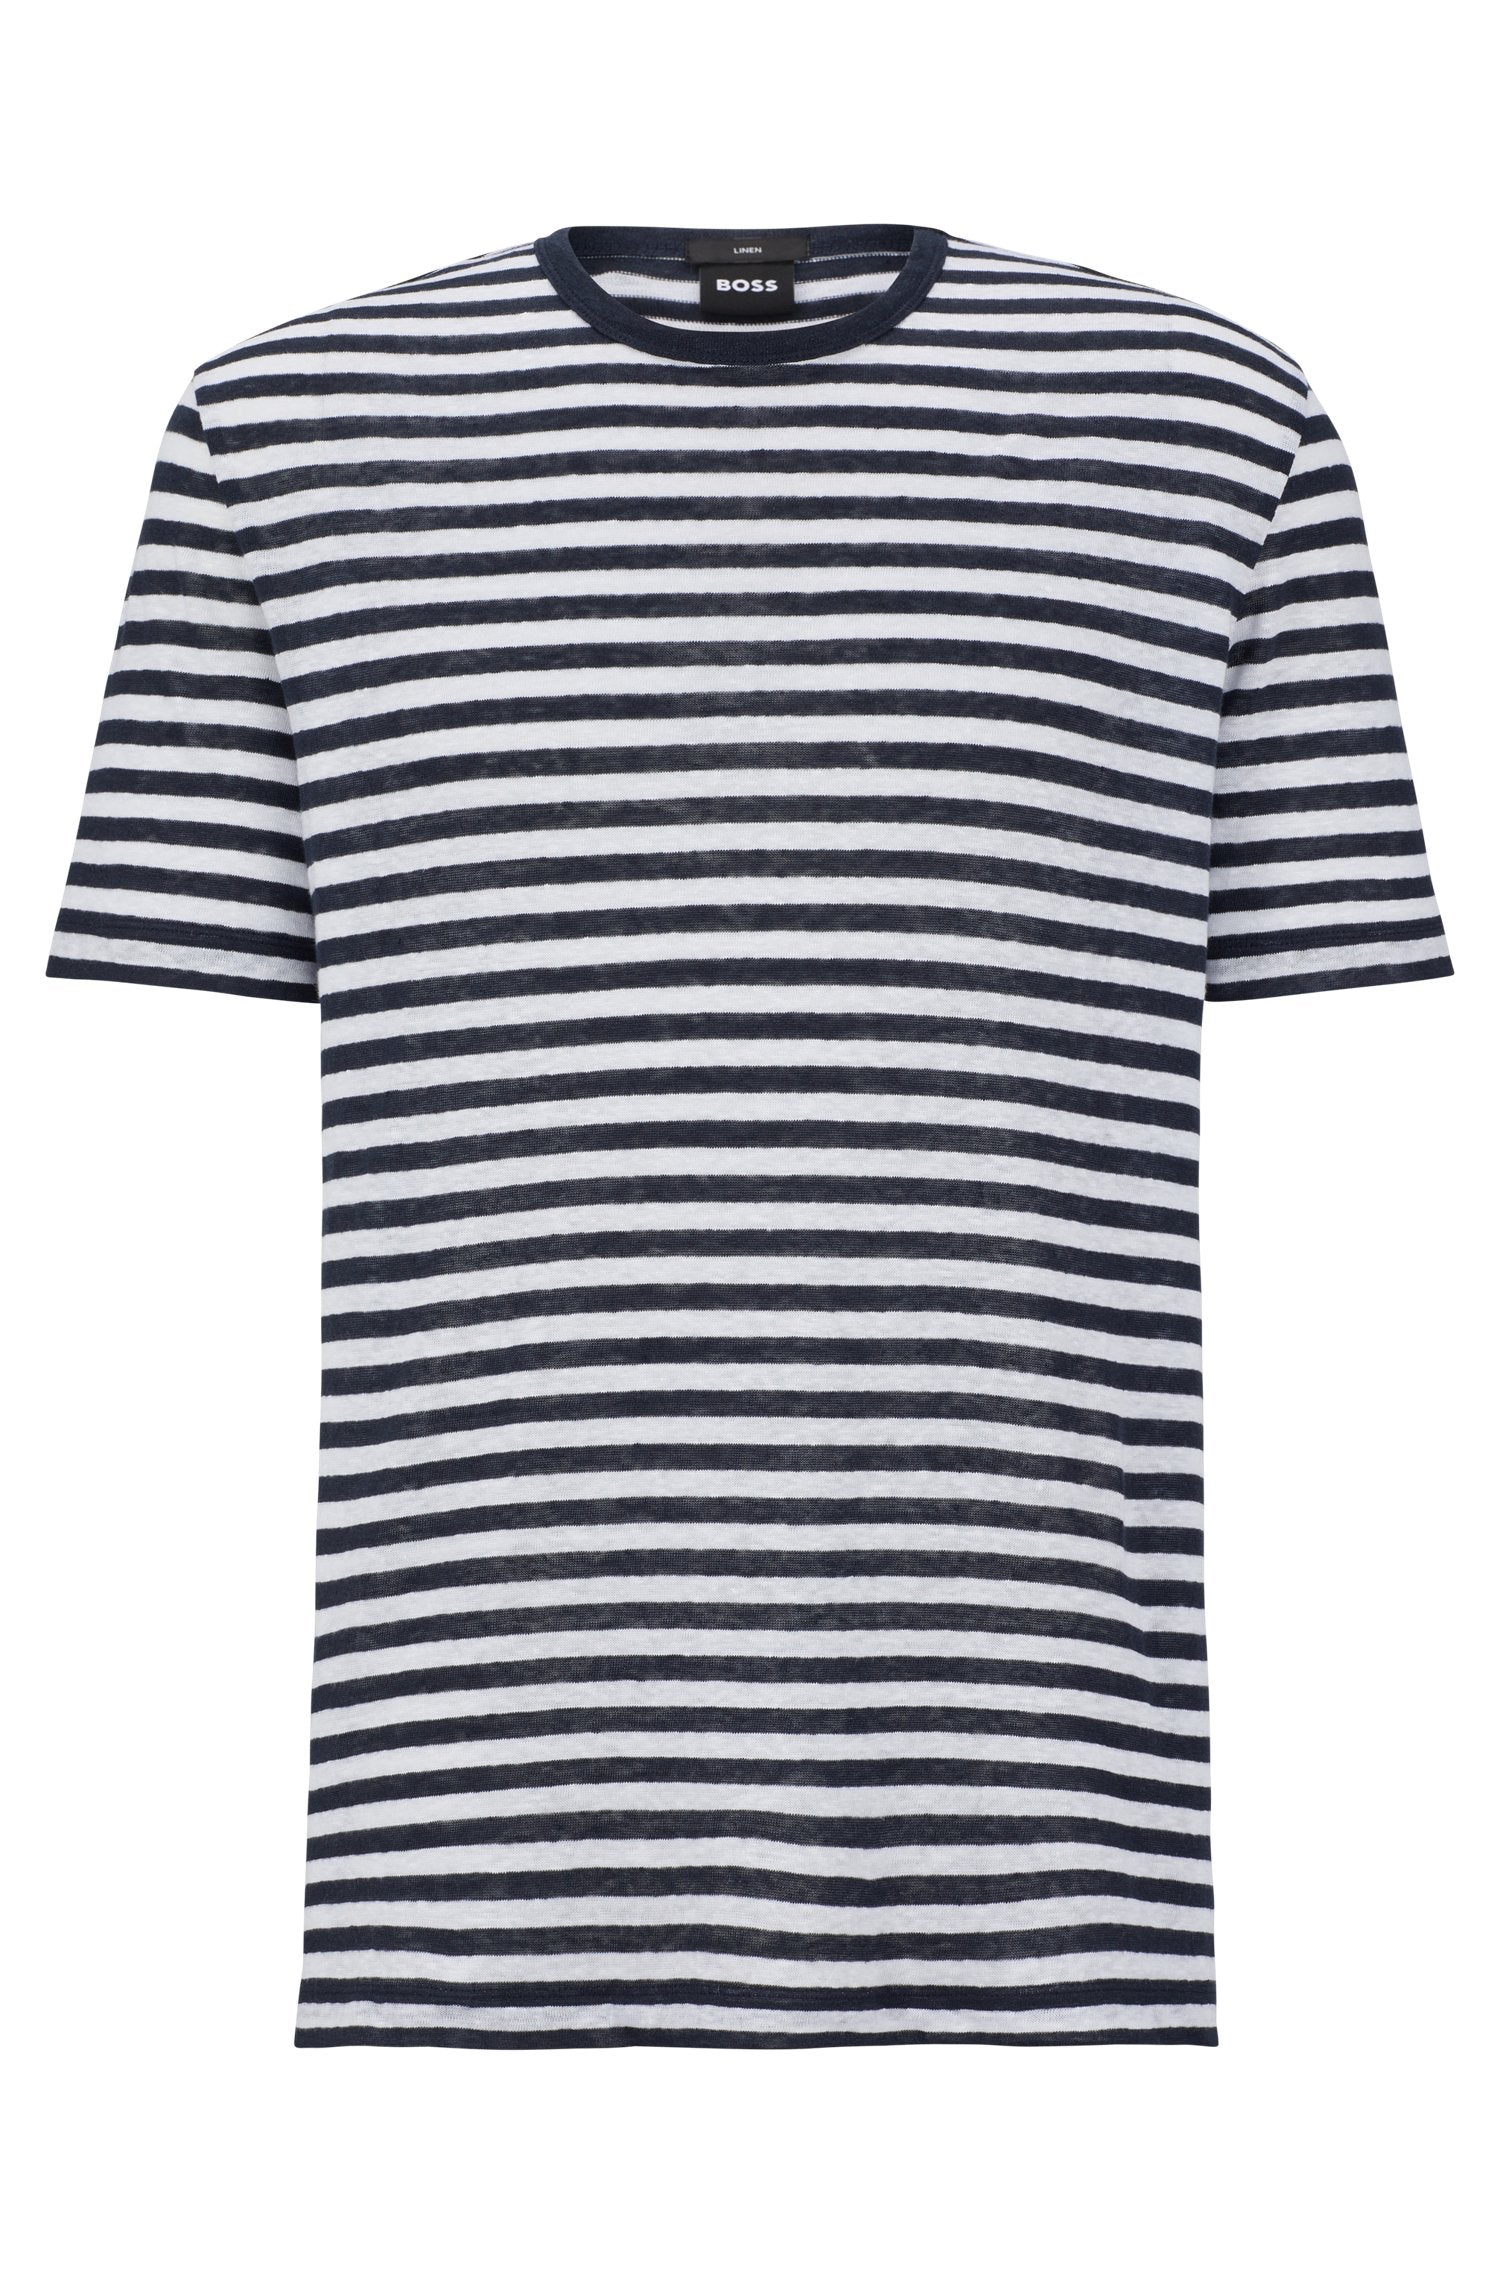 BOSS - TIBURT 350 Dark Blue Horizontal Striped T-Shirt In Pure Linen 50486232 405